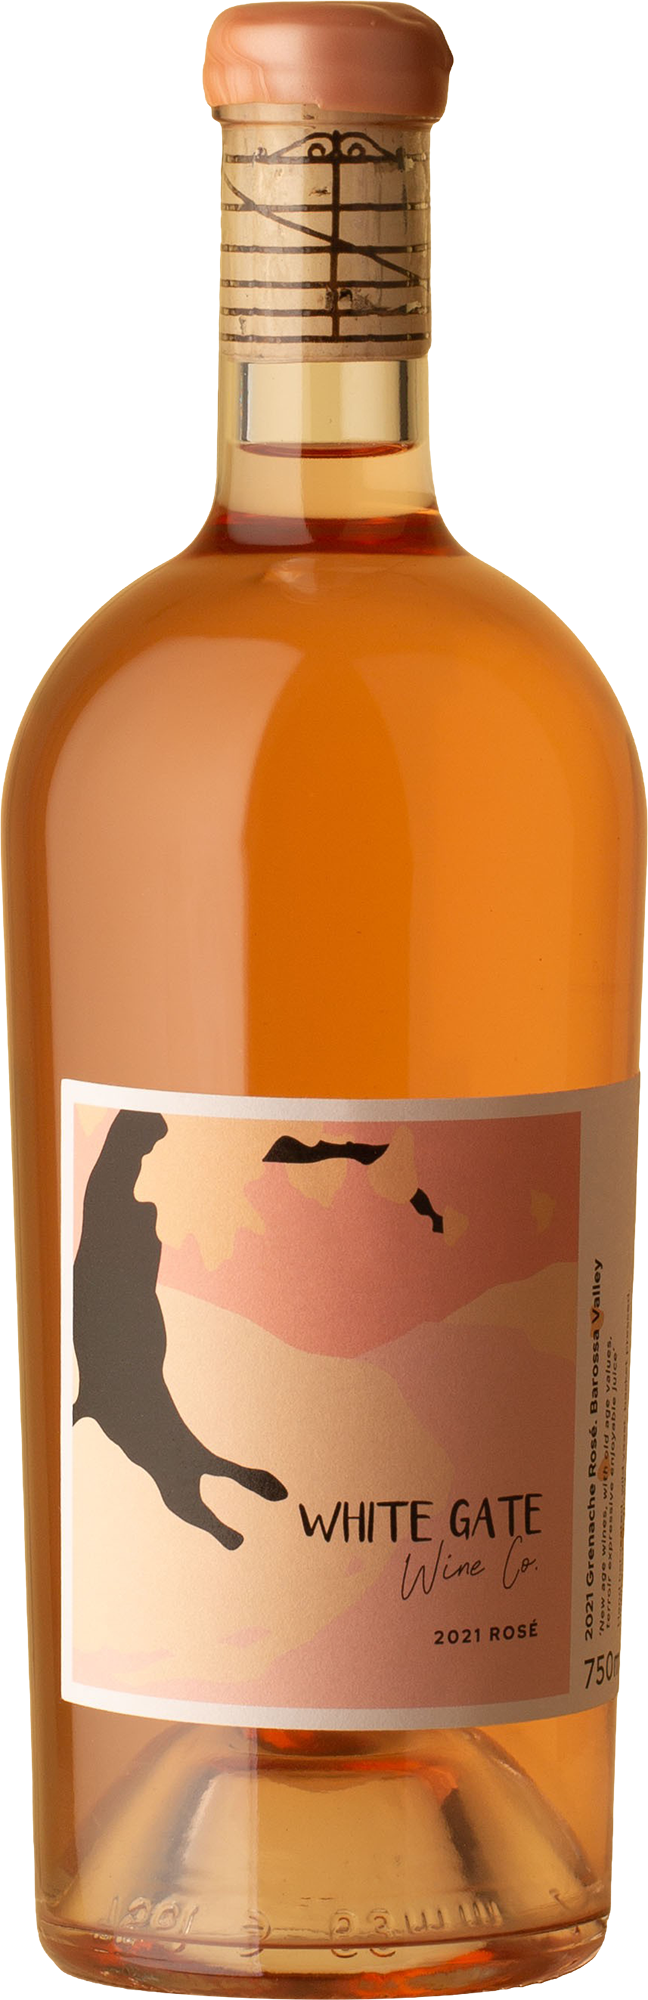 White Gate Wine Co. - Grenache Rosé 2021 Rosé